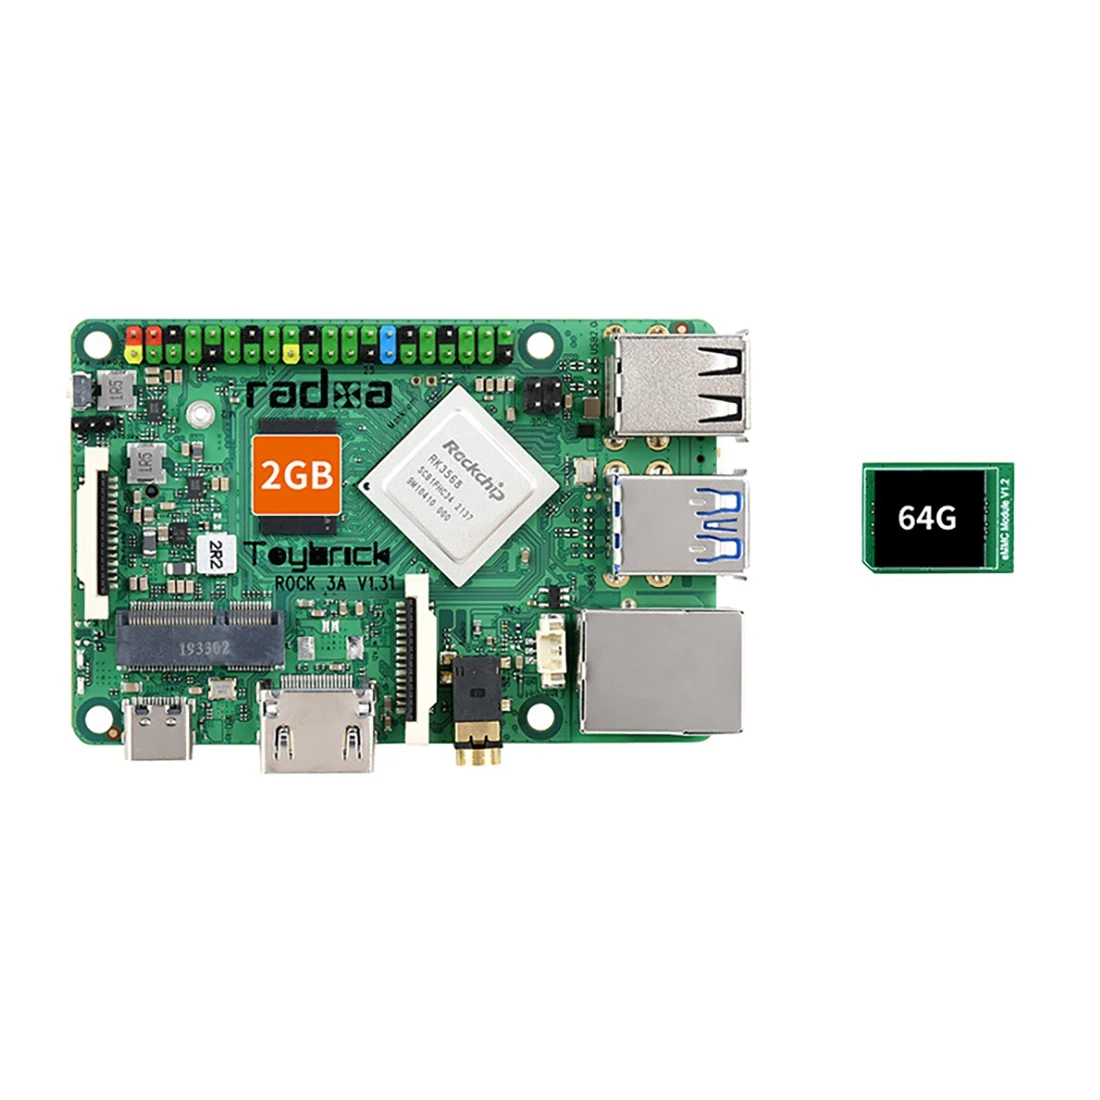 ROCK3 Model a Card Computer SBC Motherboard Module Based on RK3568 Cortex-A55 2GB RAM Development Board with 64GB EMMC